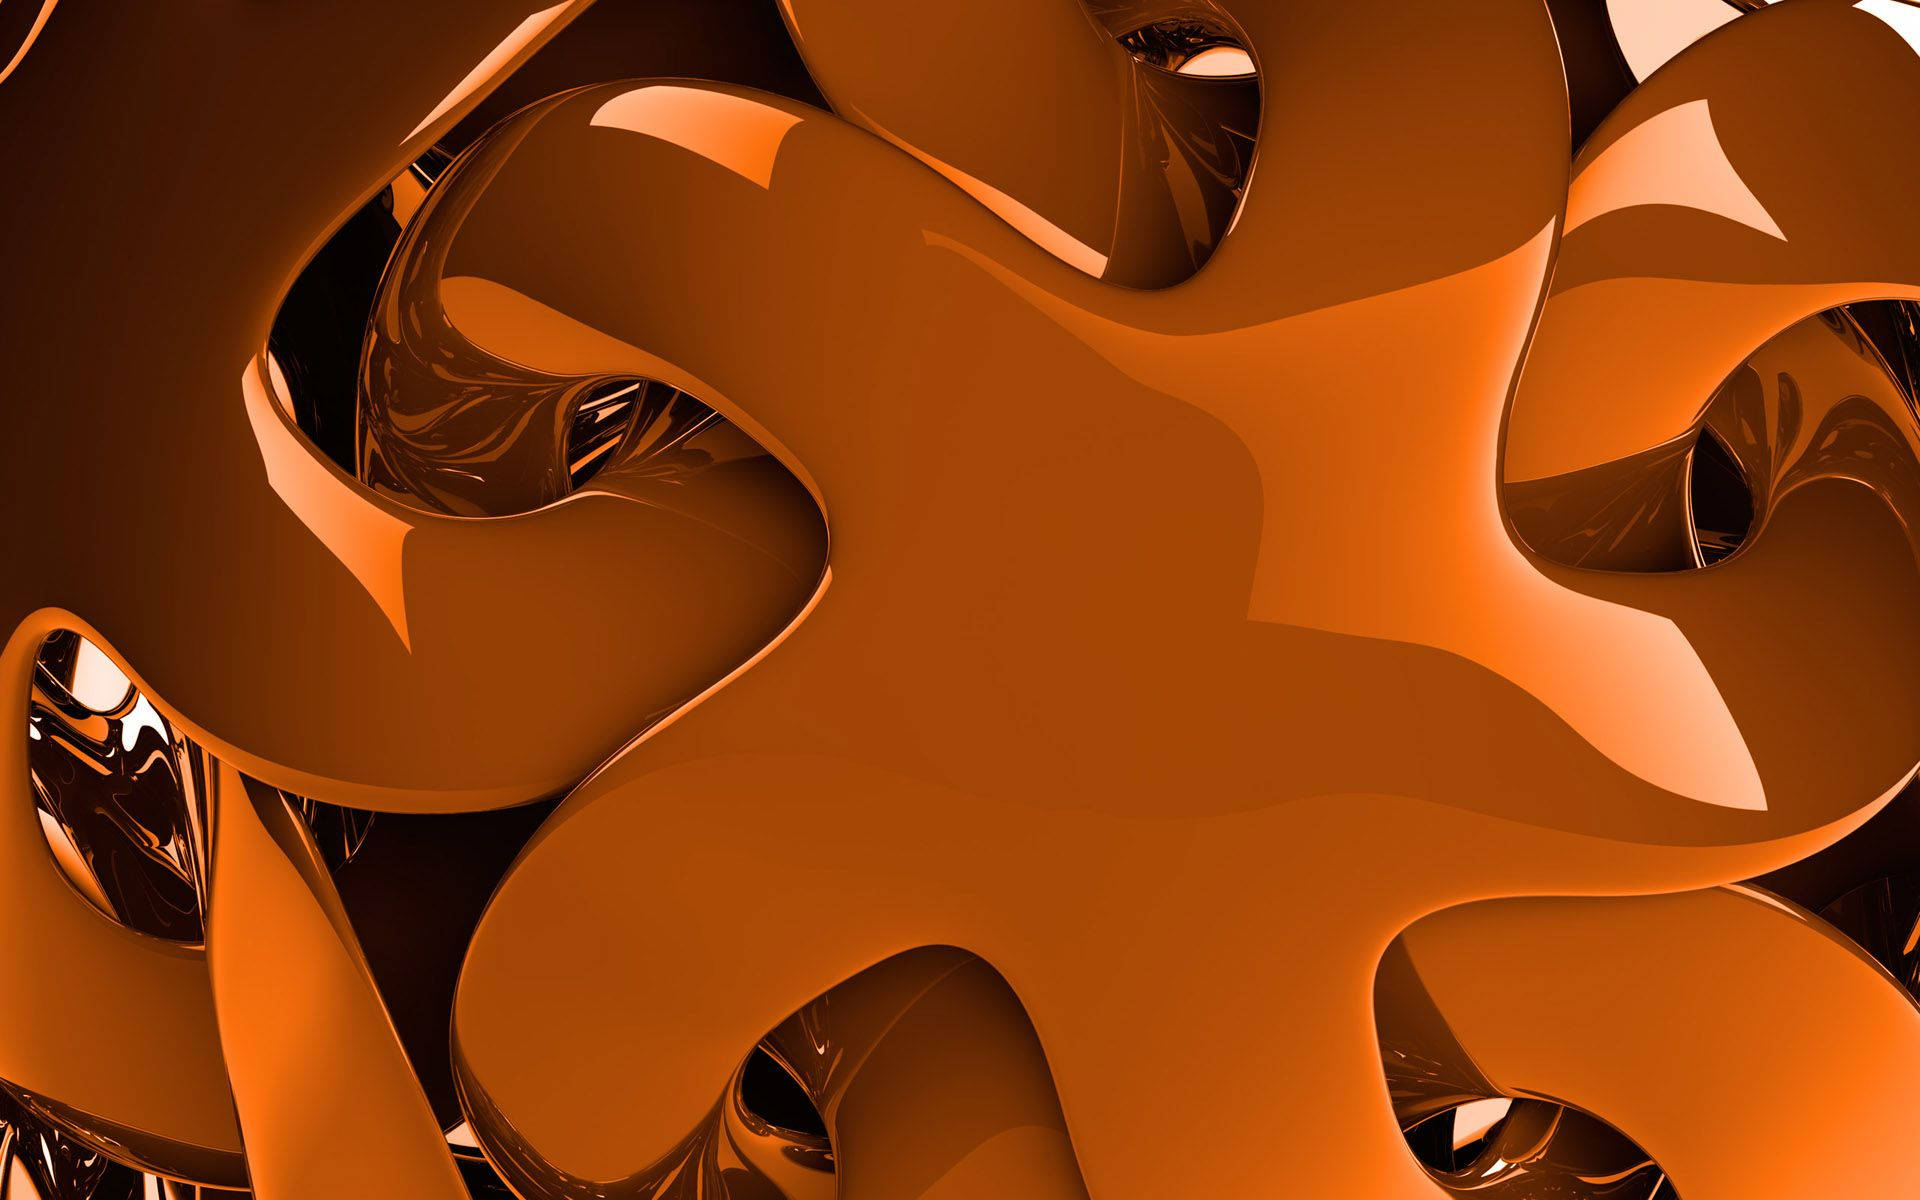 Shiny Neon Orange Abstract Shapes Background